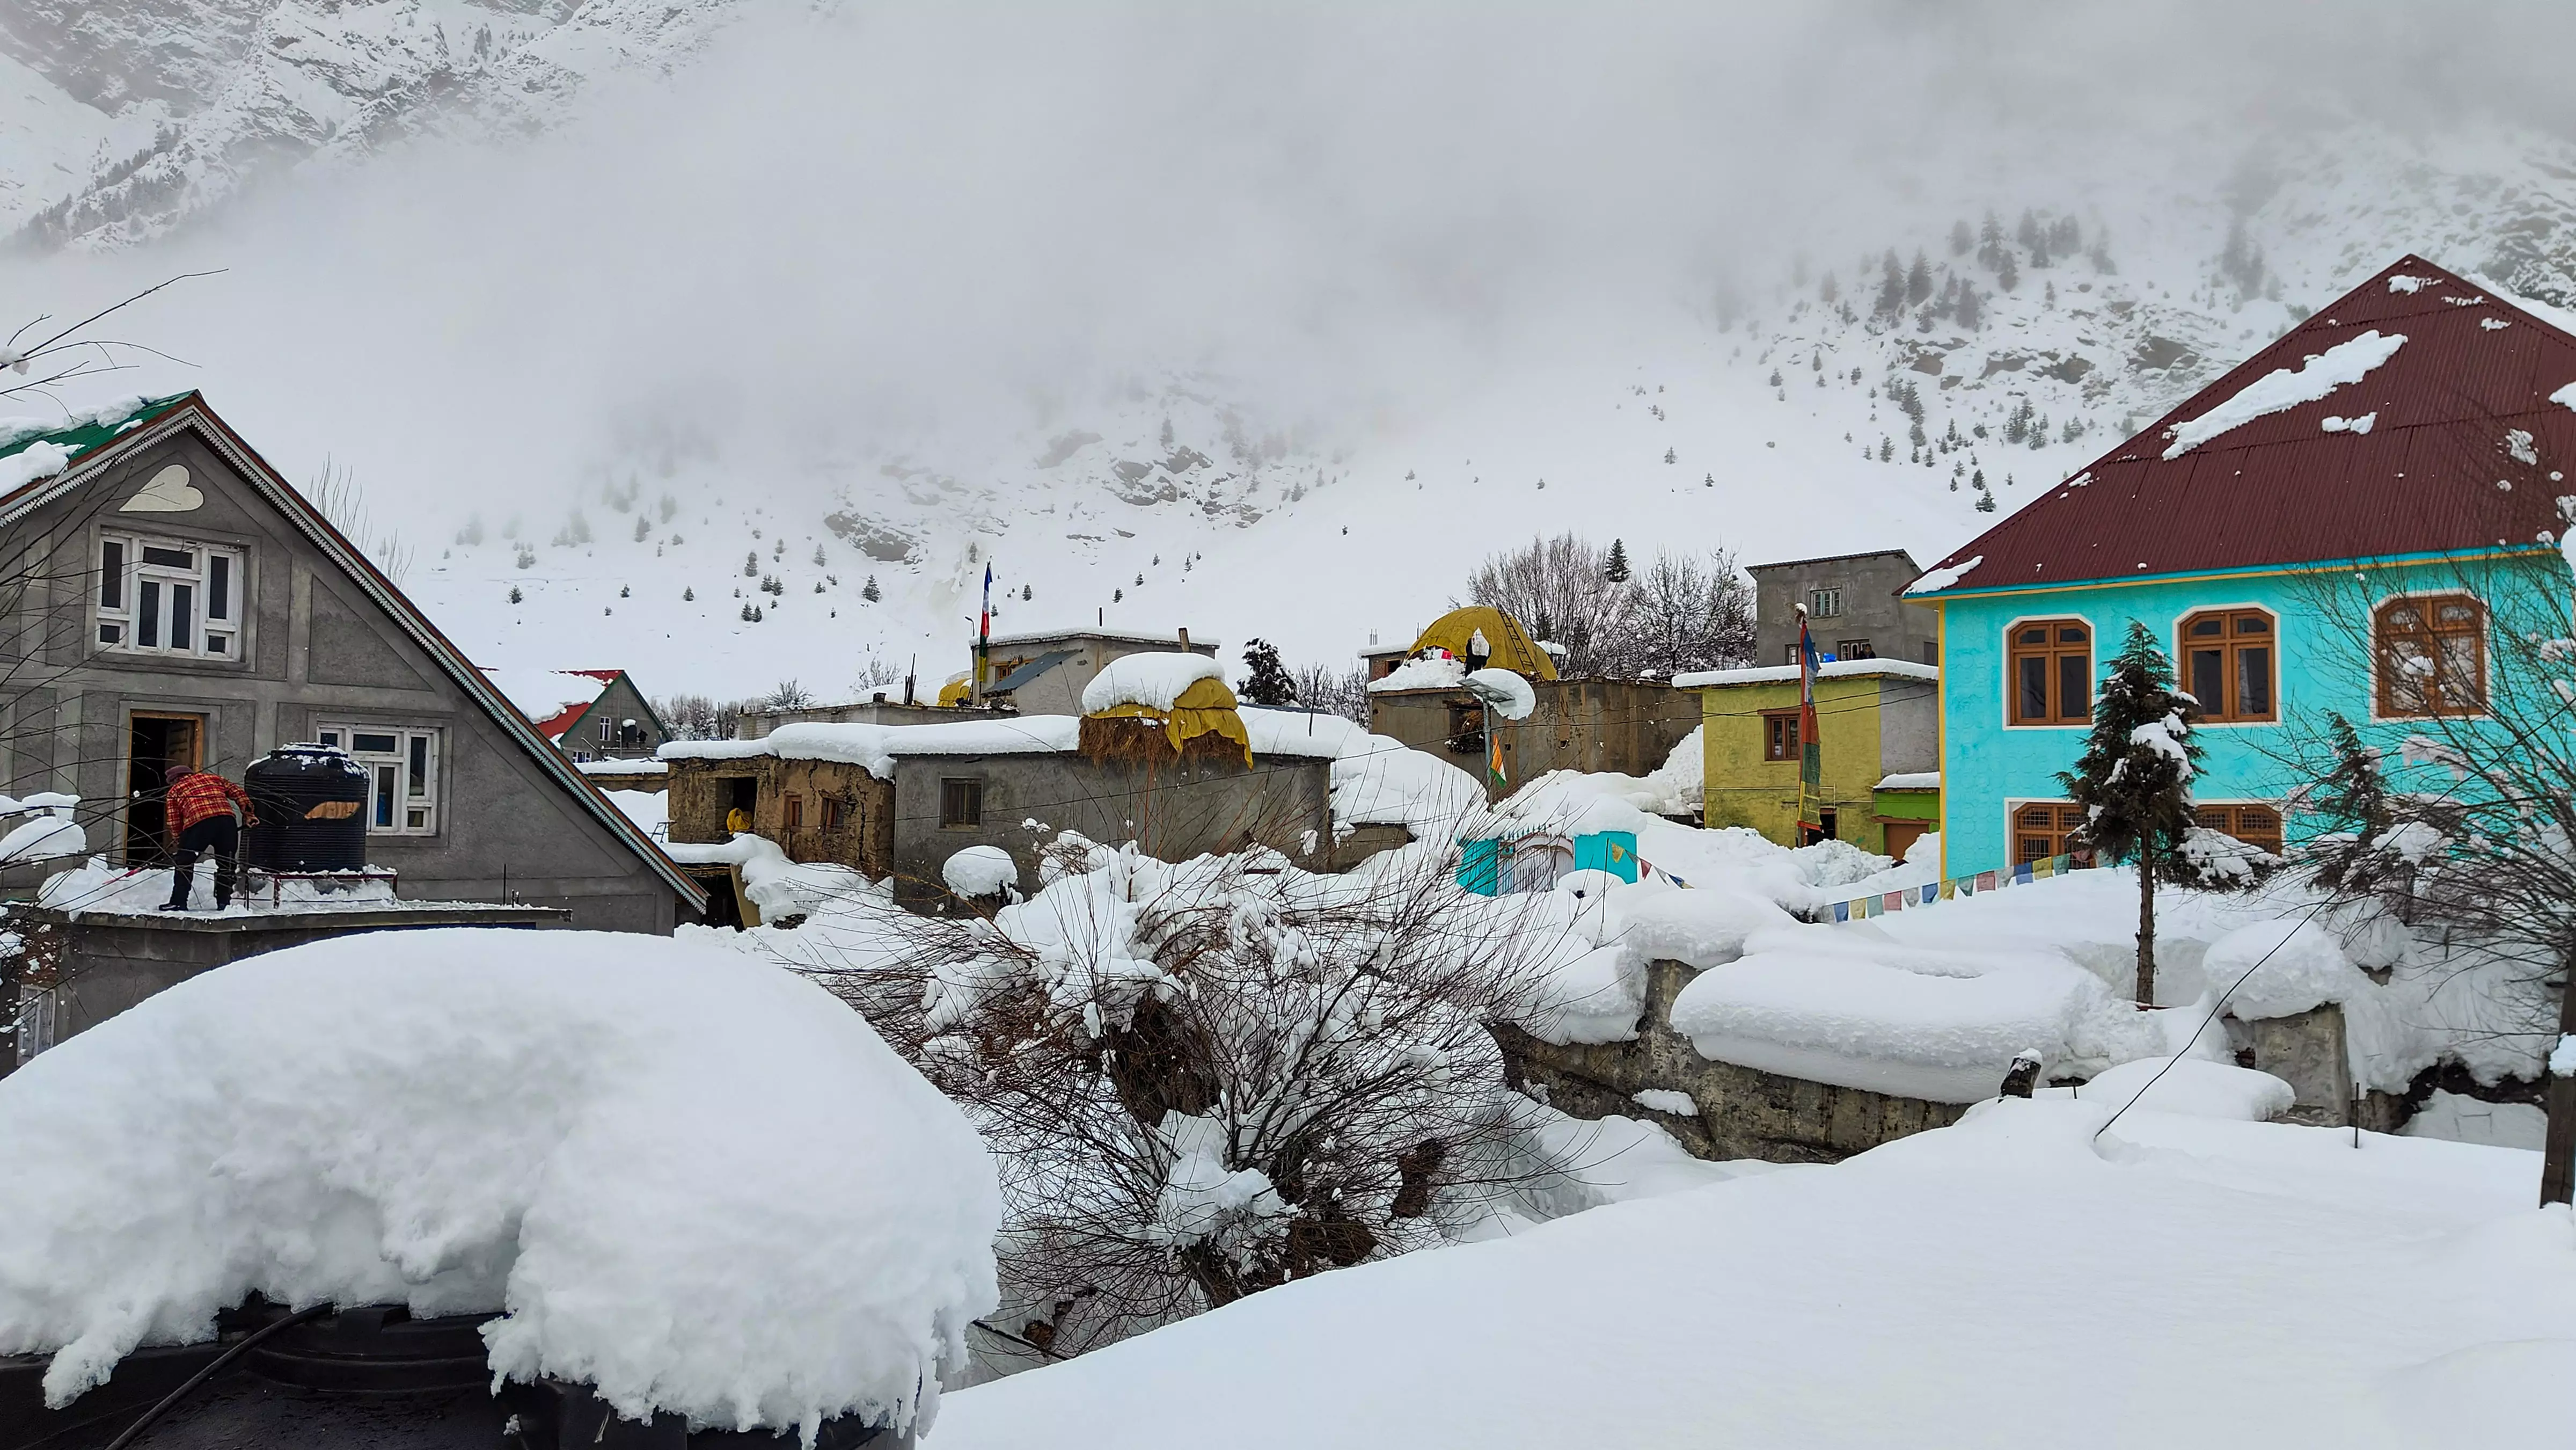 168 roads shut down as snow and rain batter regions of Himachal Pradesh